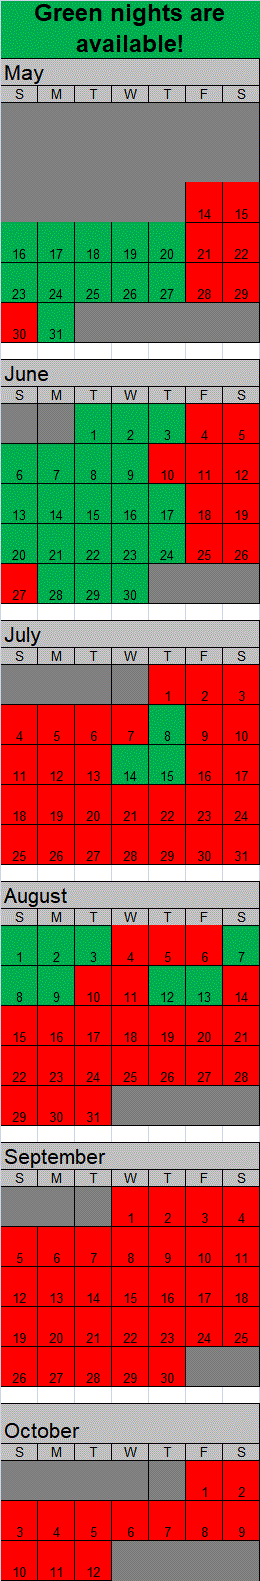 Lakeview Site 1 2015 Calendar